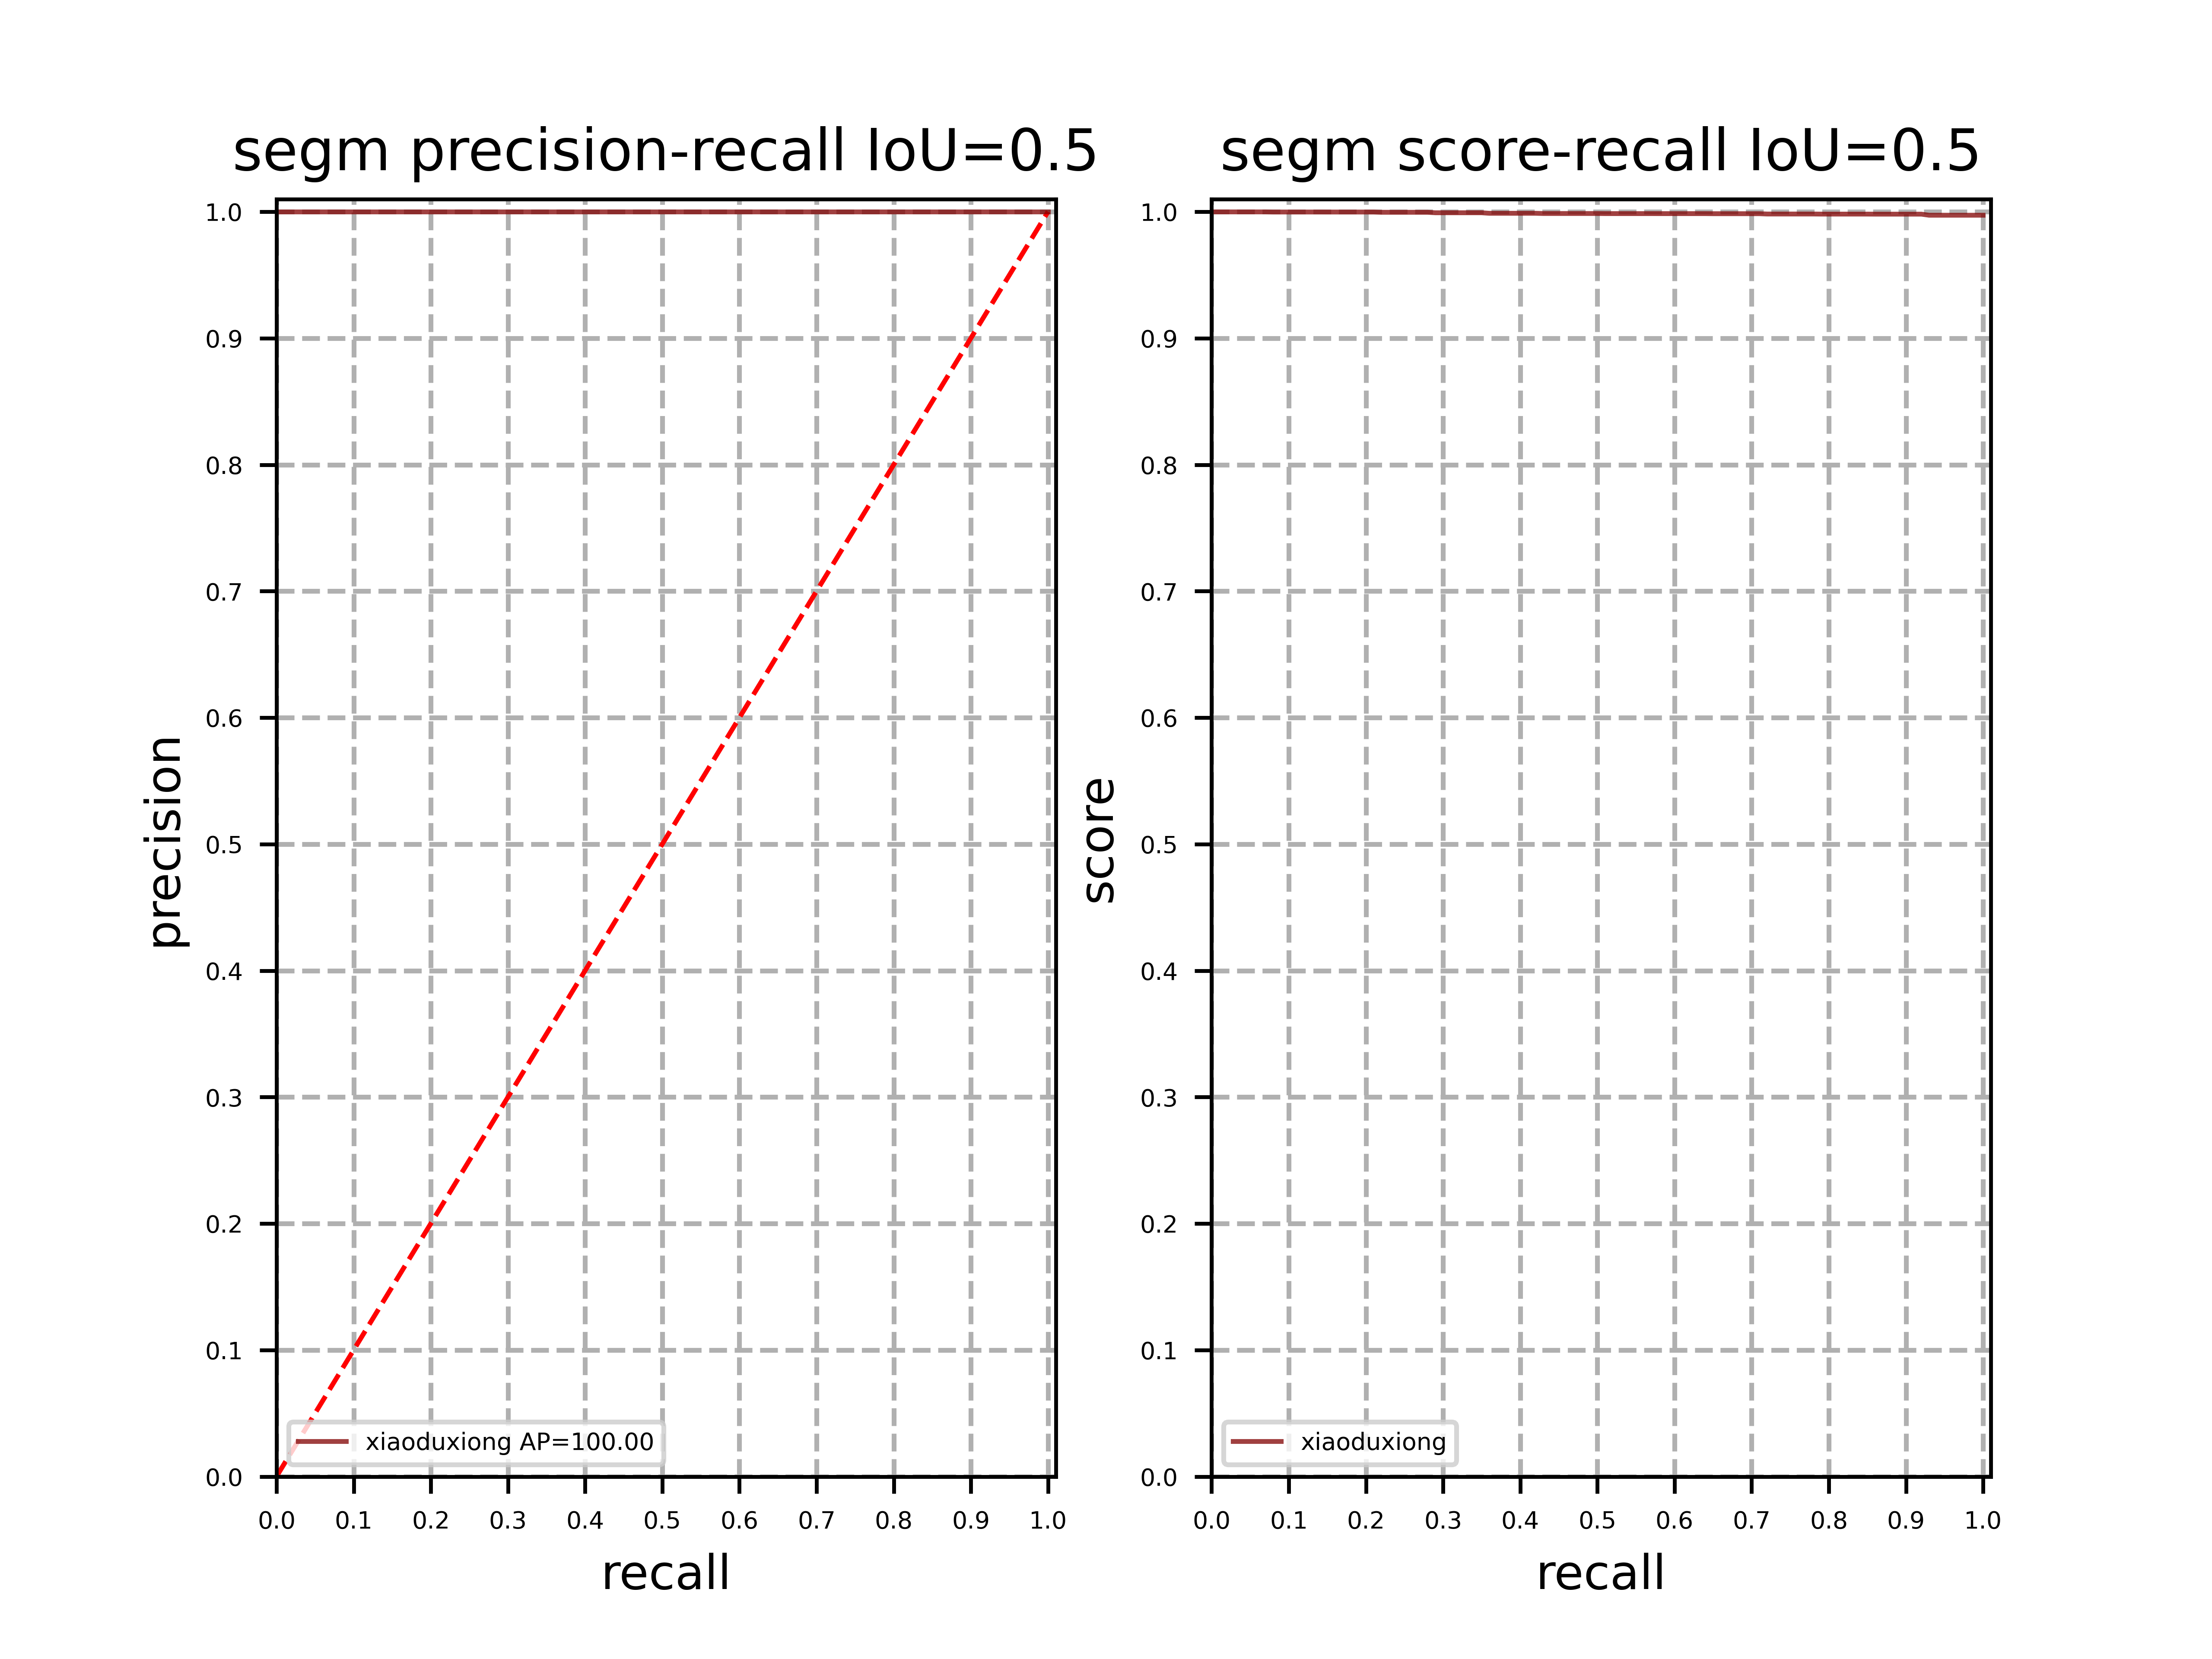 docs/apis/images/xiaoduxiong_segm_pr_curve(iou-0.5).png